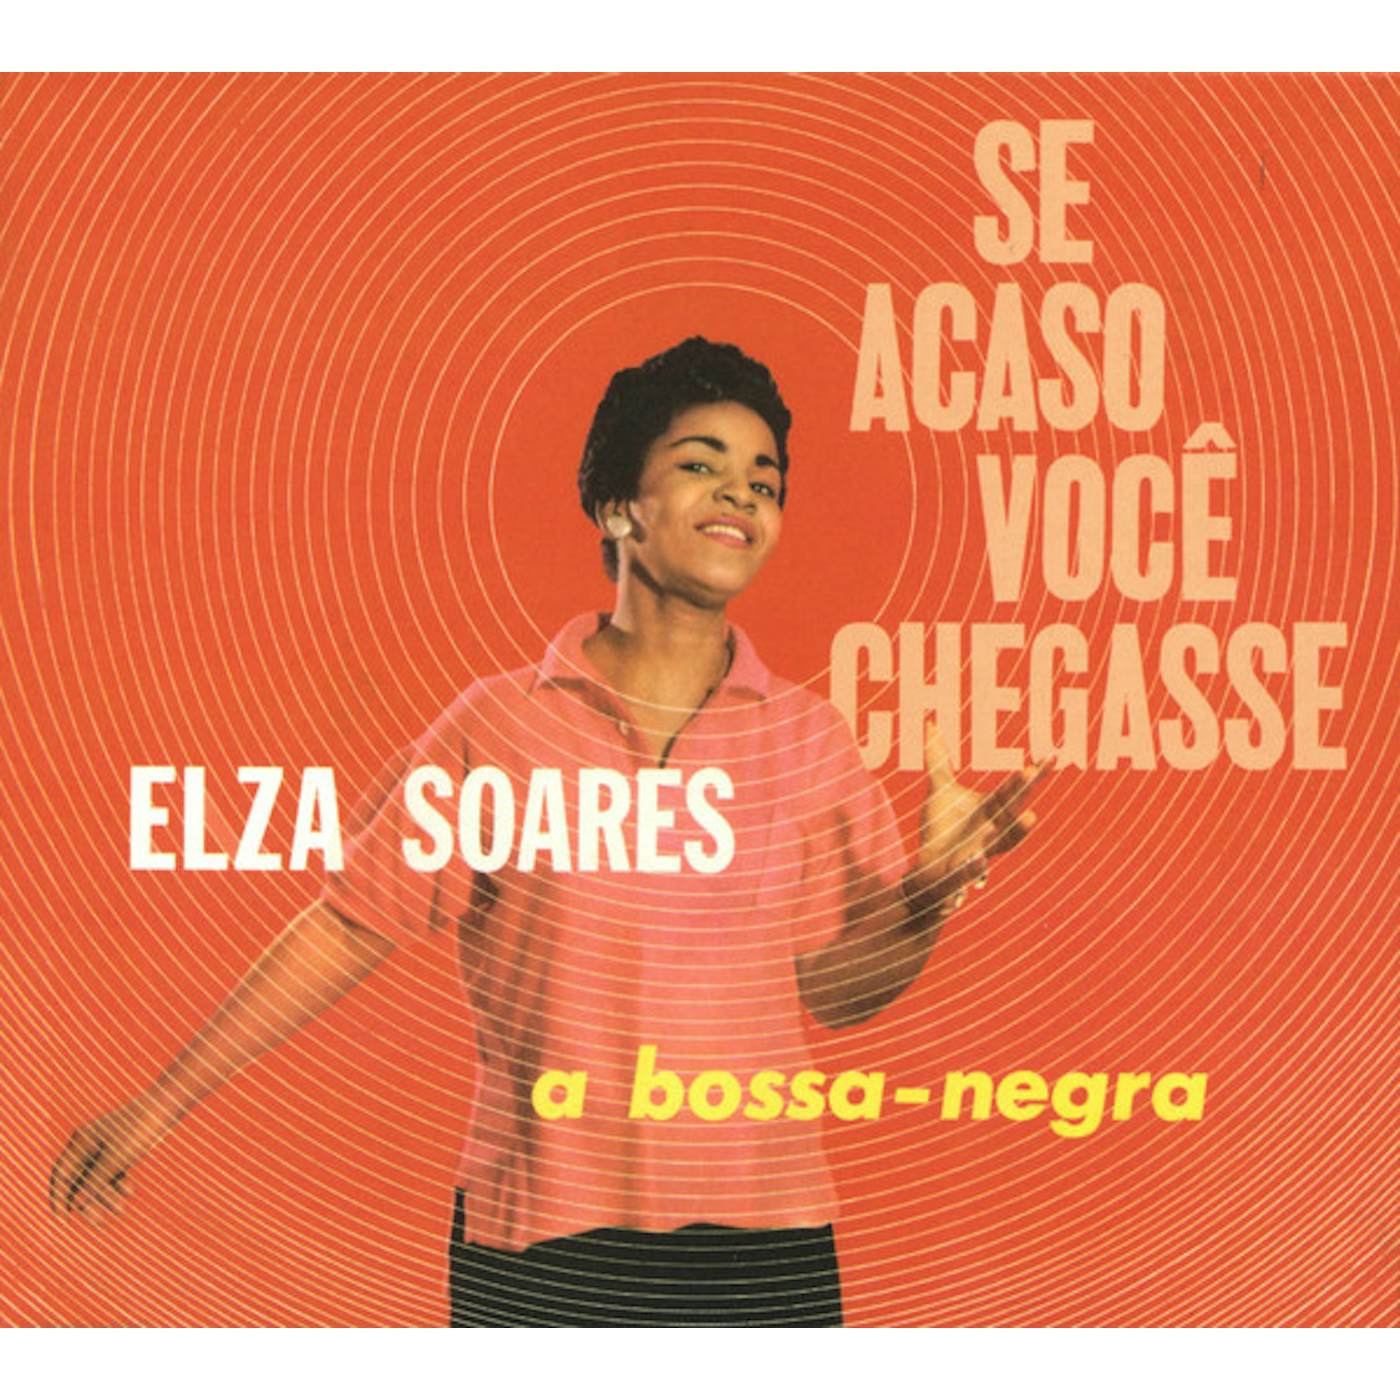 Elza Soares SE ACASO VOCE CHEGASSE / A BOSSA NEGRA CD